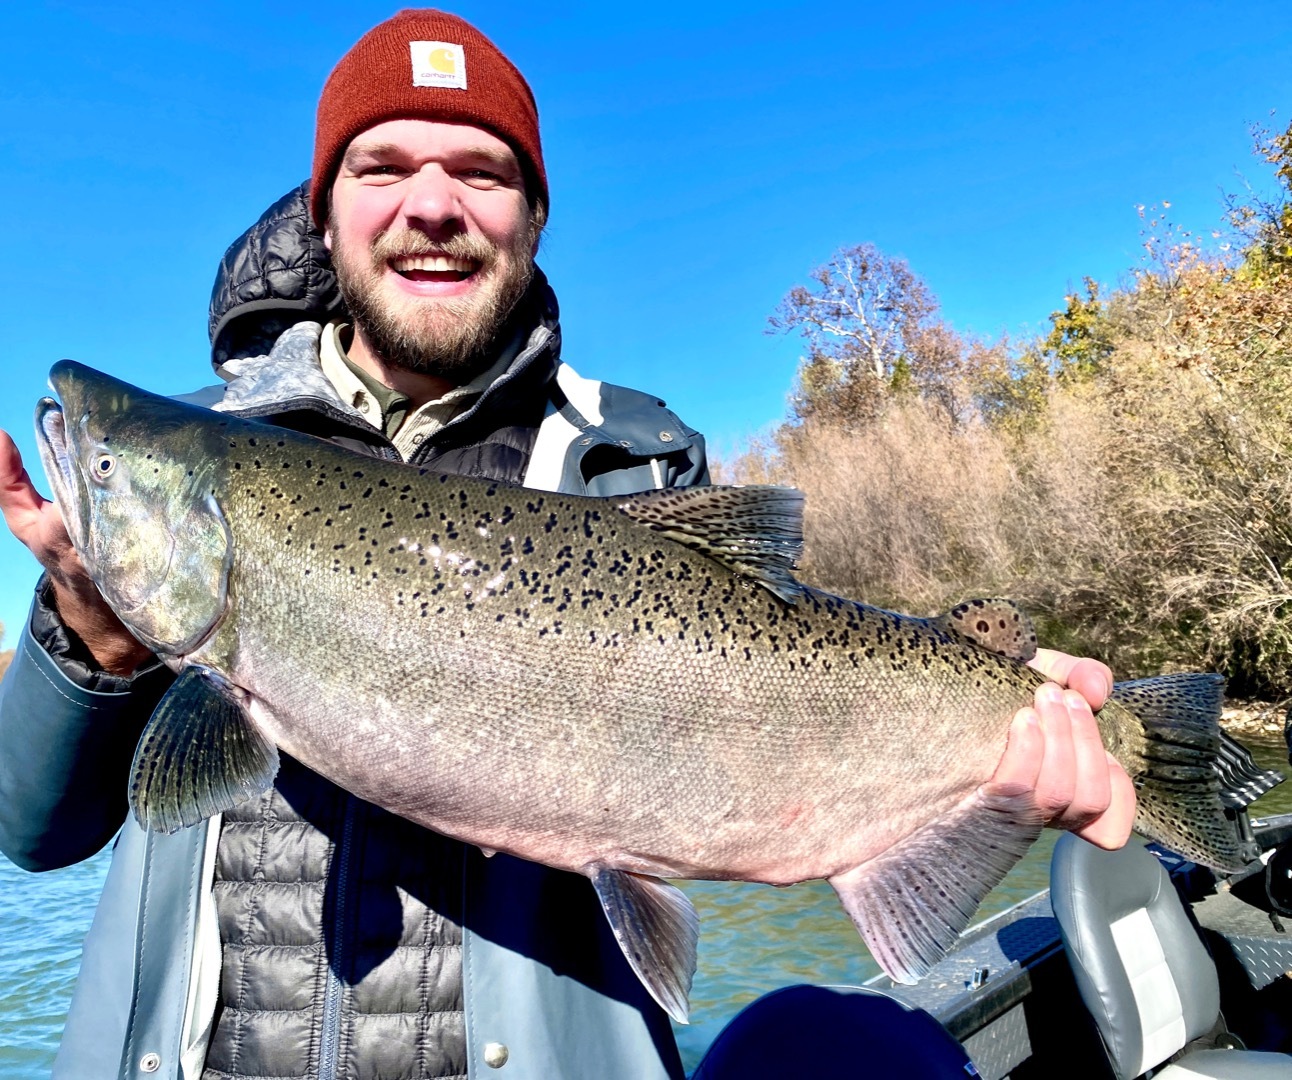 Sac River Salmon/steelhead Fishing Opportunities This Holiday Season!